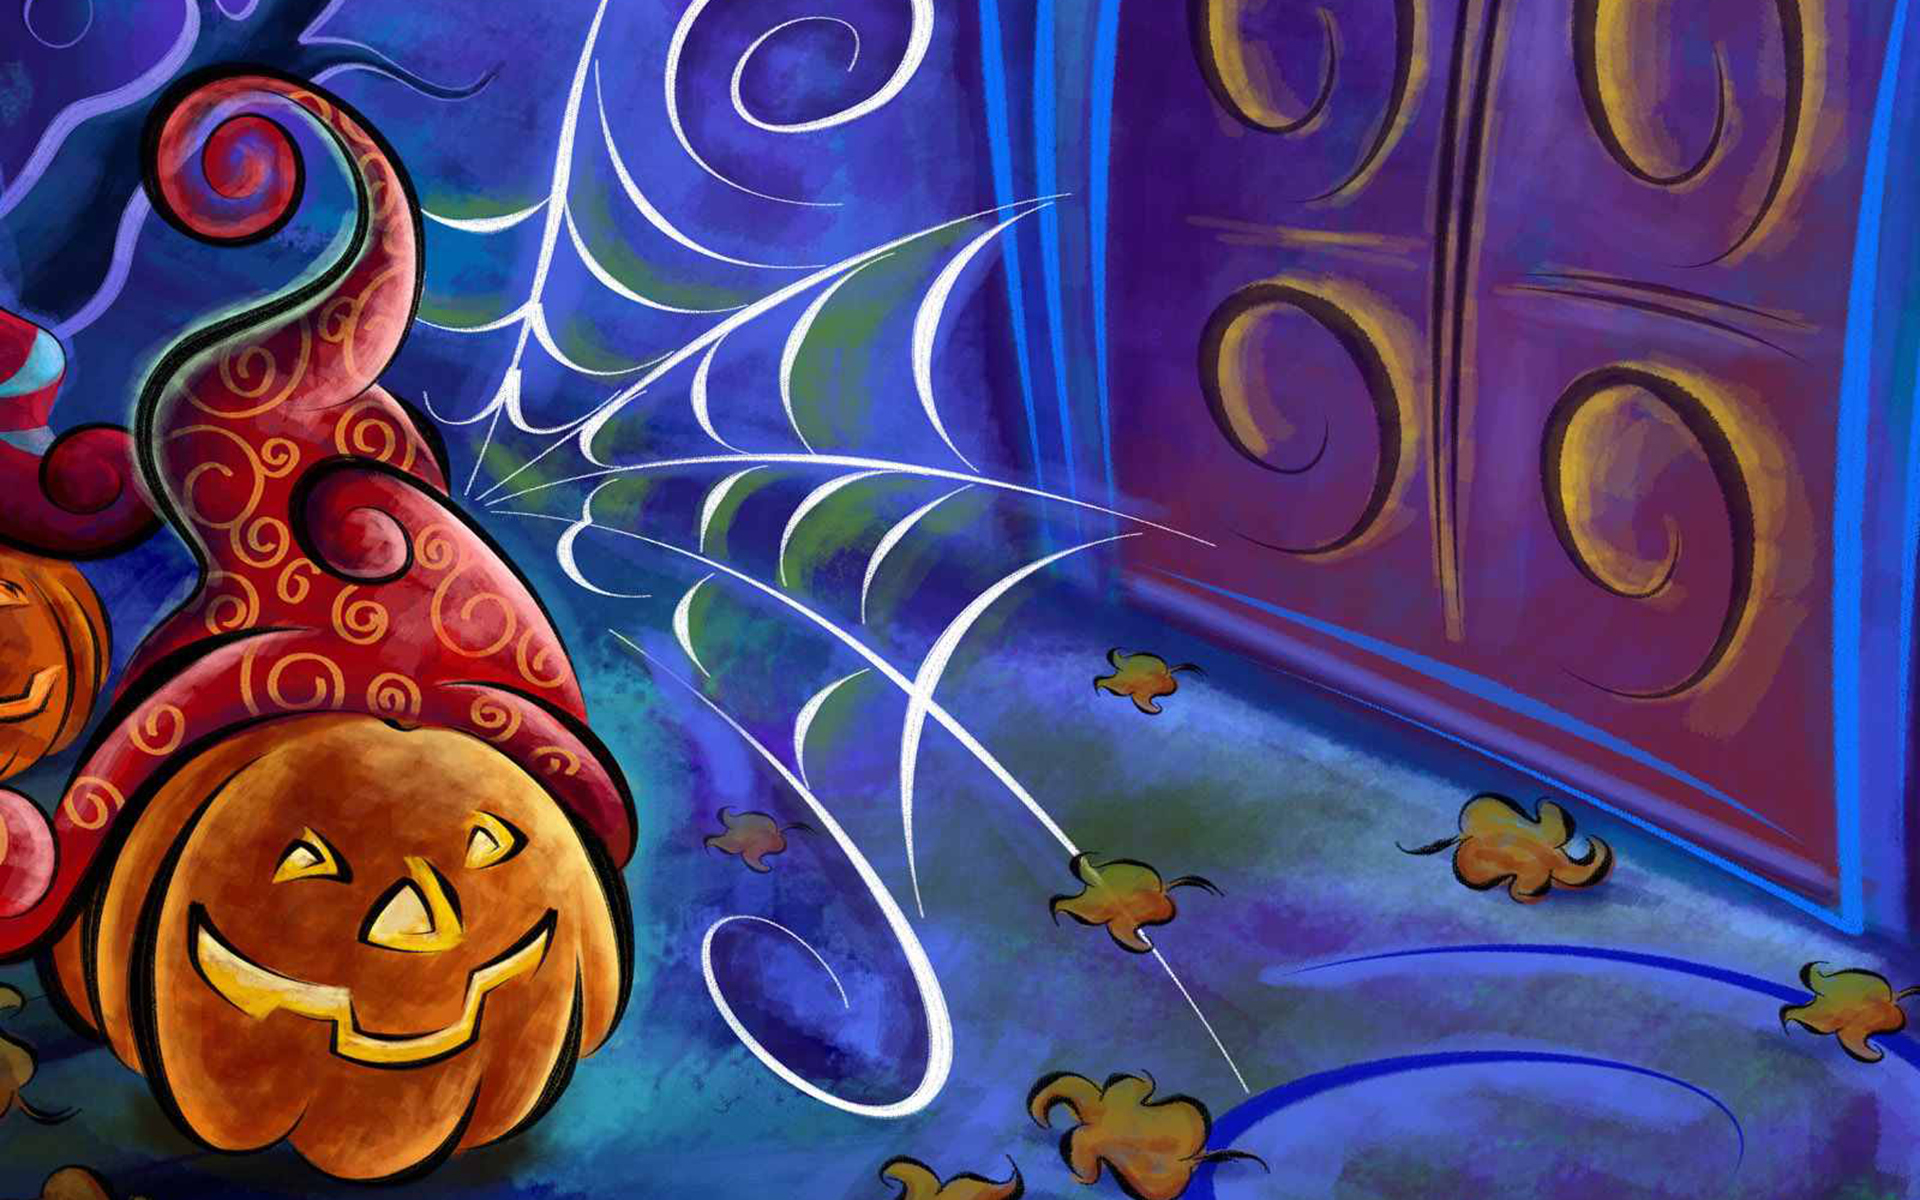 6100 Purple Halloween Background Illustrations RoyaltyFree Vector  Graphics  Clip Art  iStock